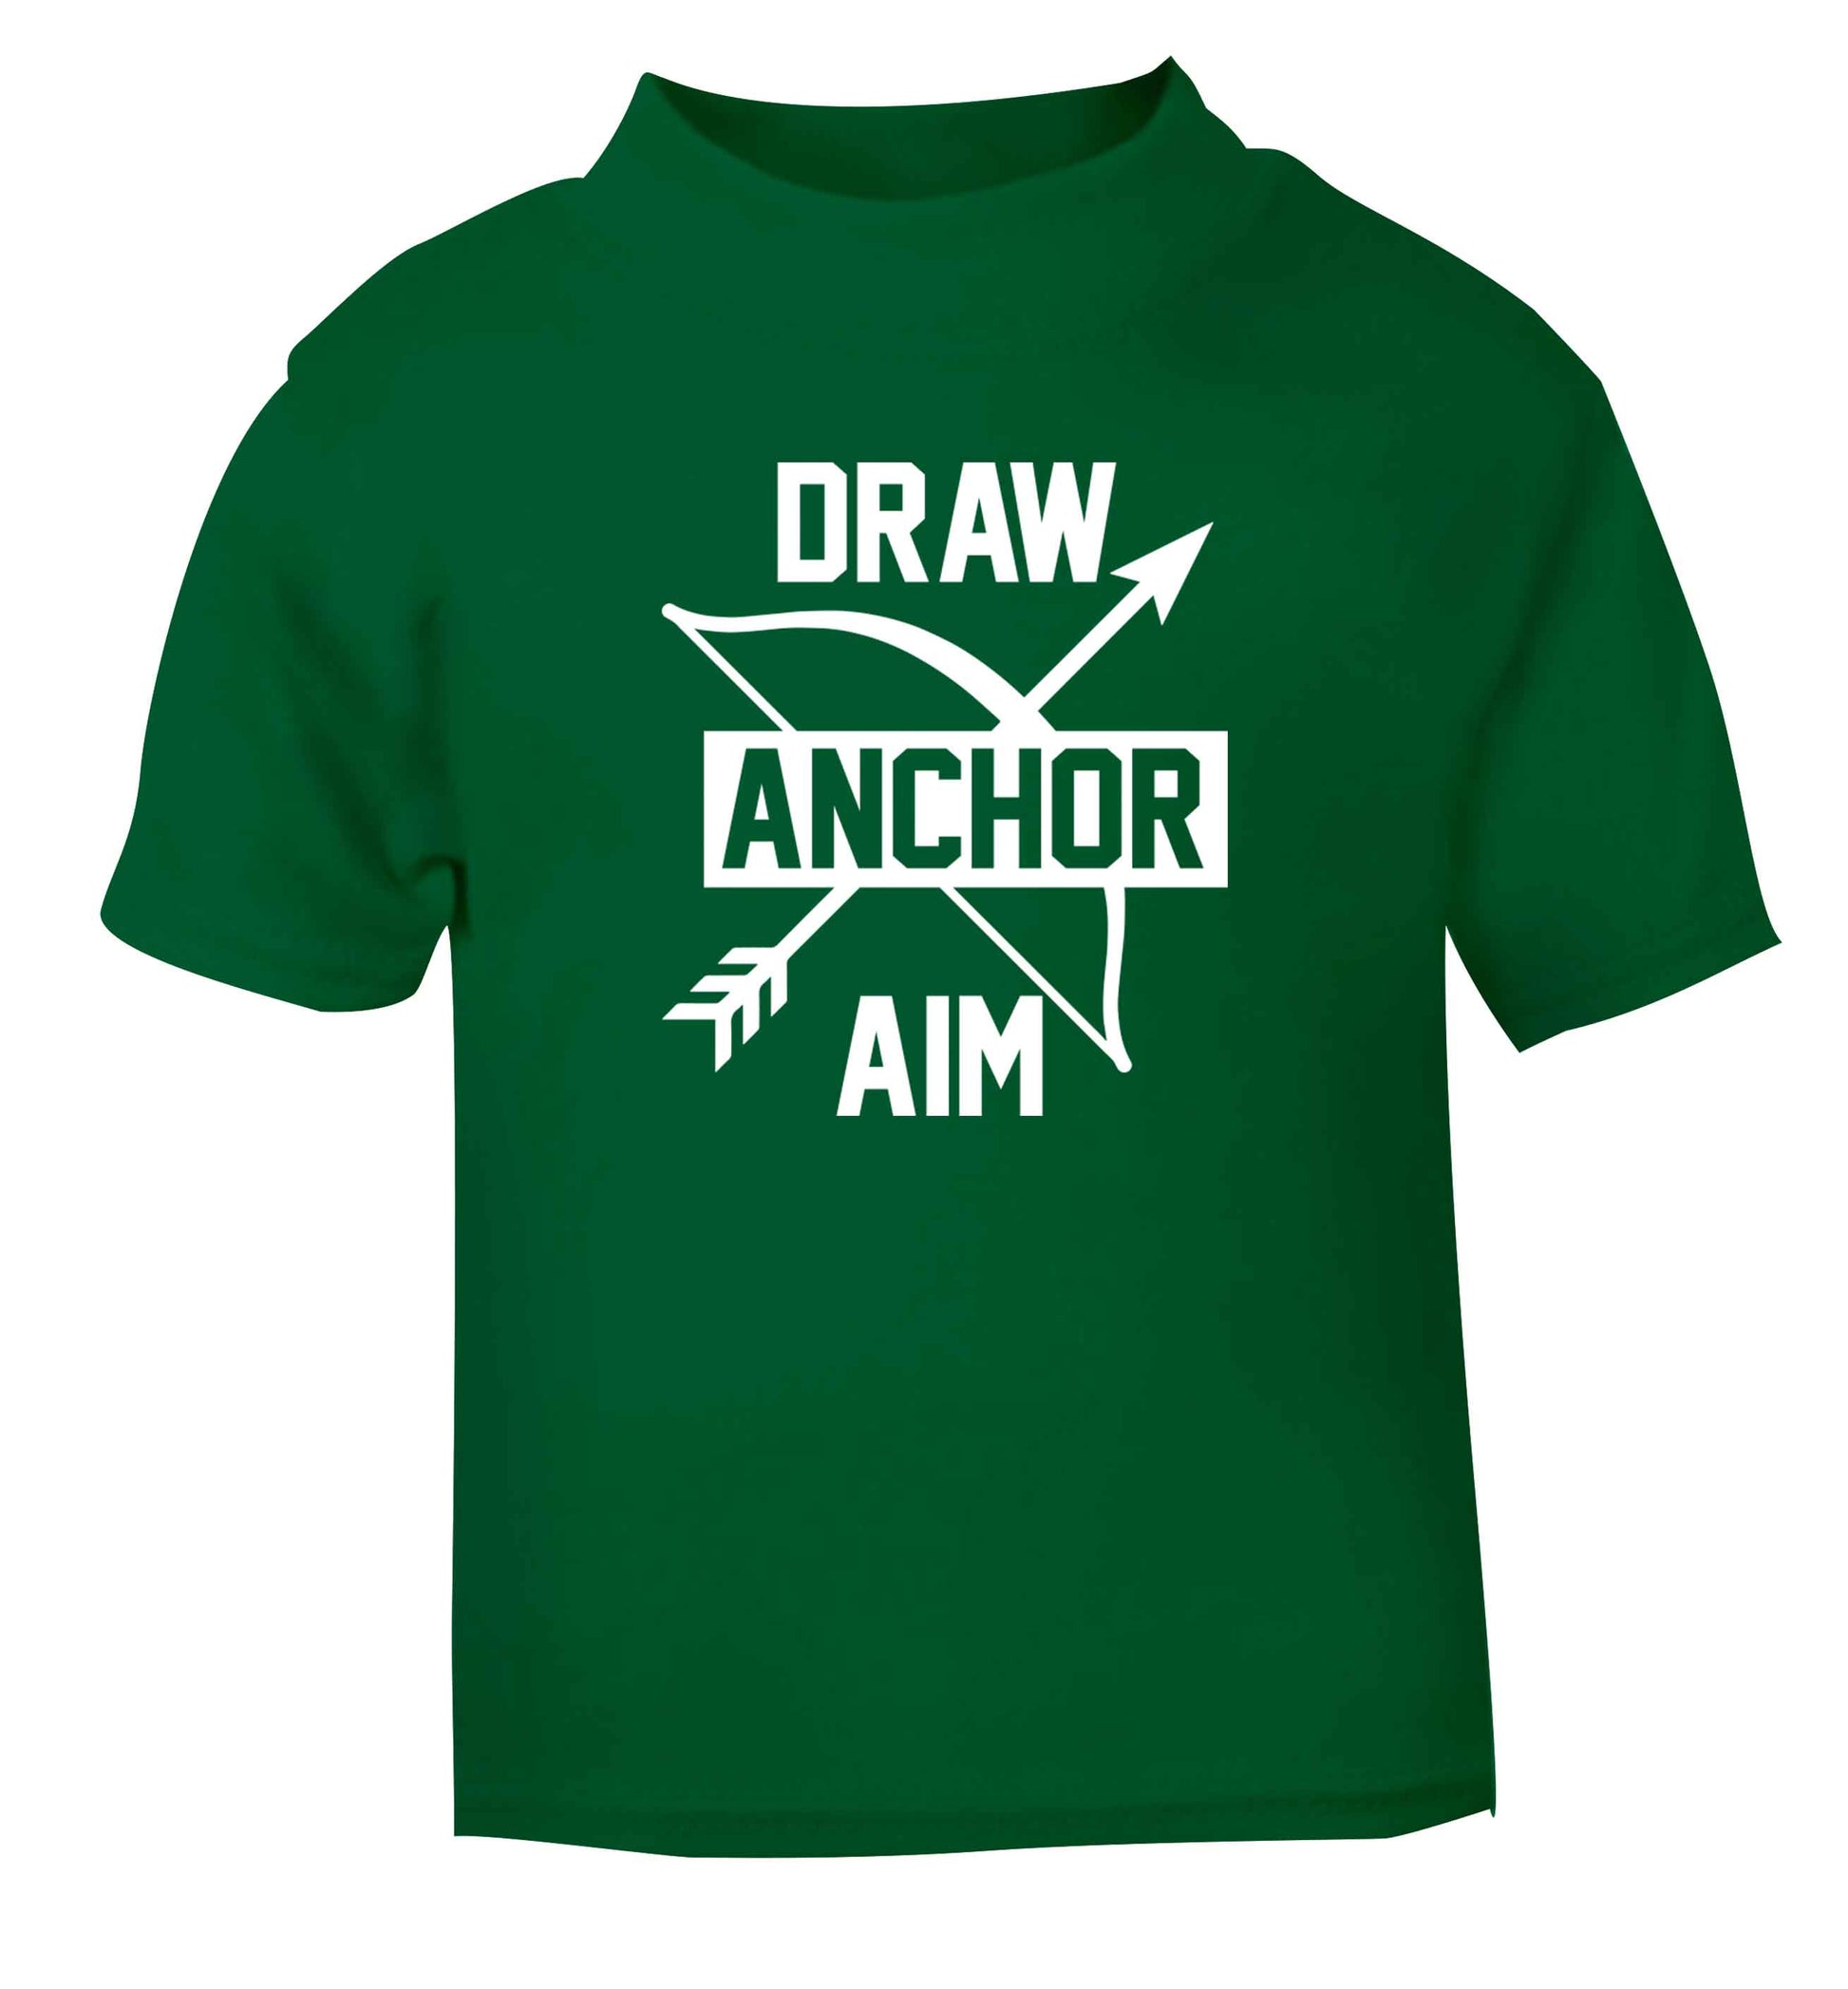 Draw anchor aim green Baby Toddler Tshirt 2 Years